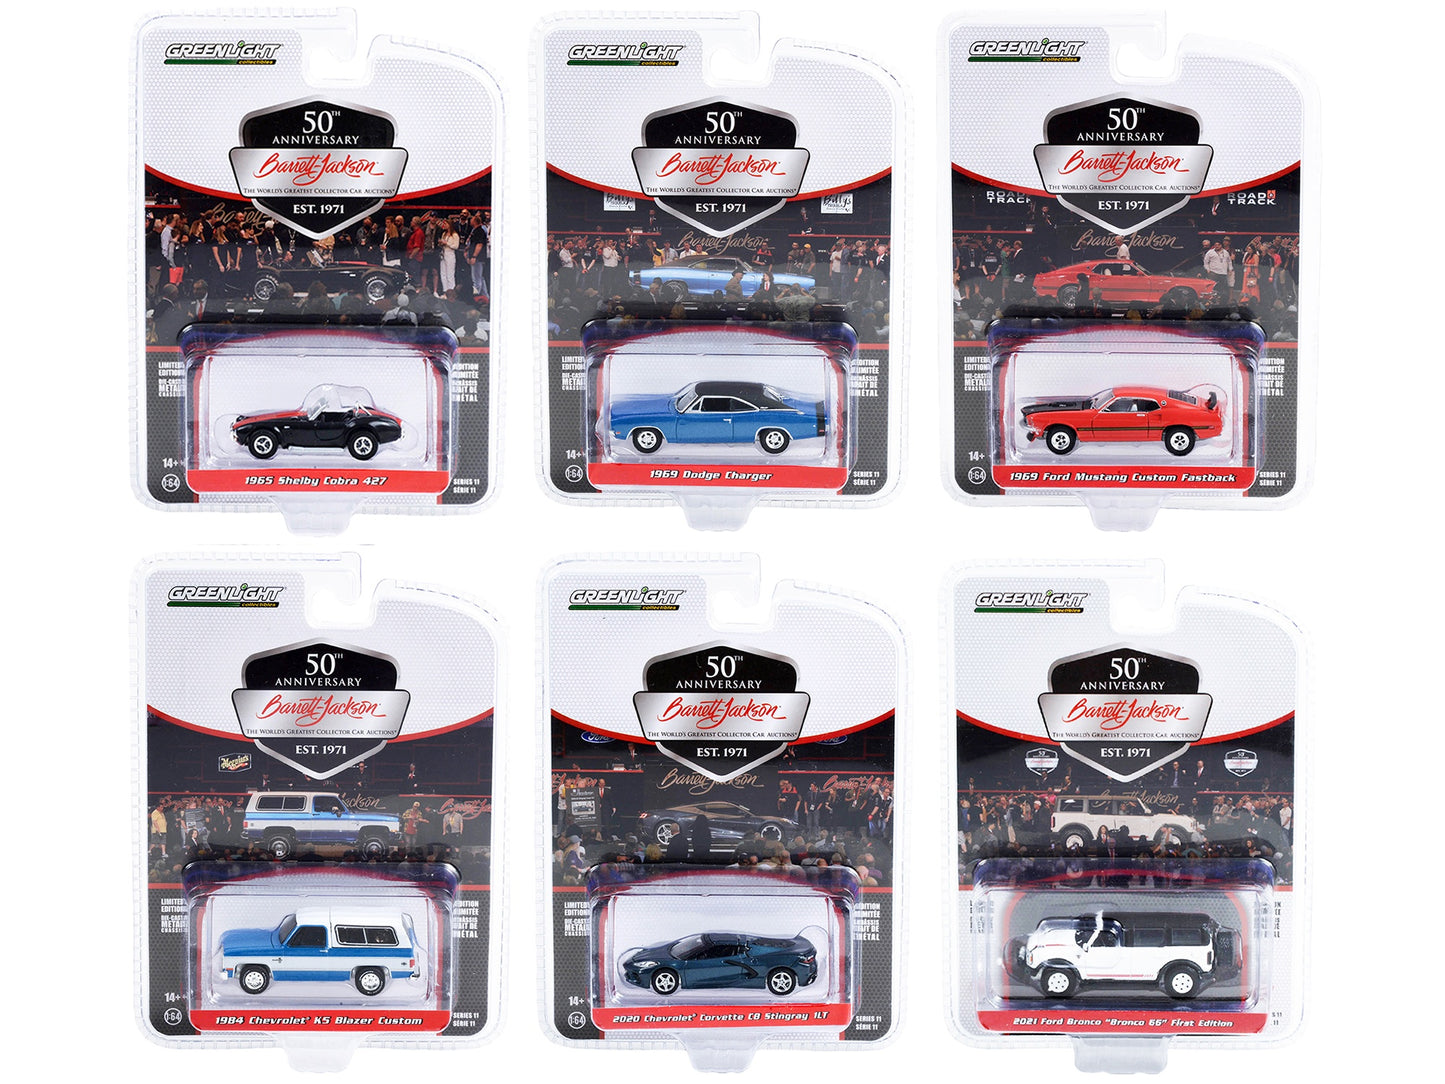 Barrett Jackson "Scottsdale Edition" Set of 6 Cars Series 11 1/64 Diecast Model Cars by Greenlight